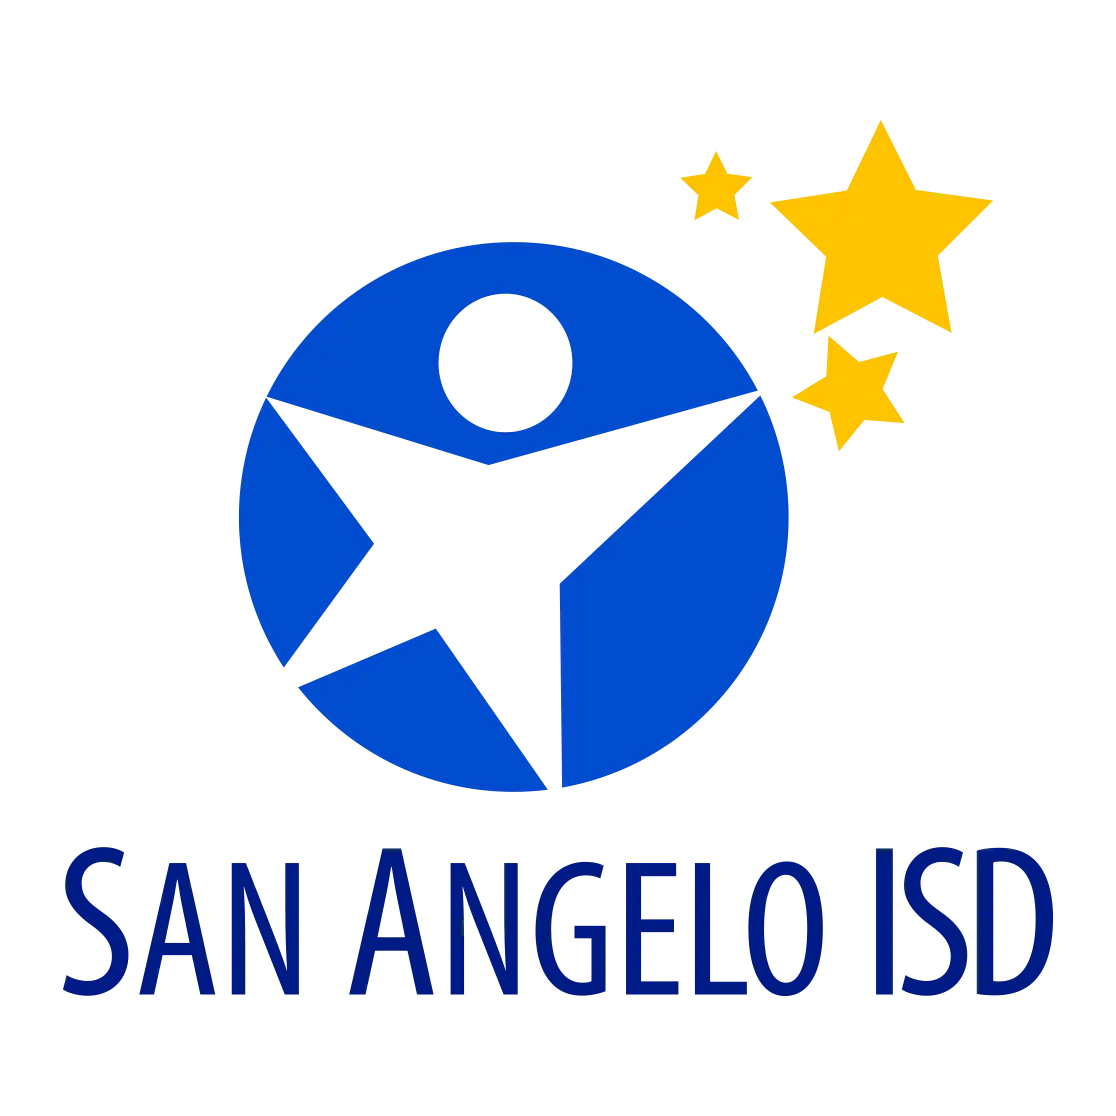 San Angelo ISD - Panorama Client